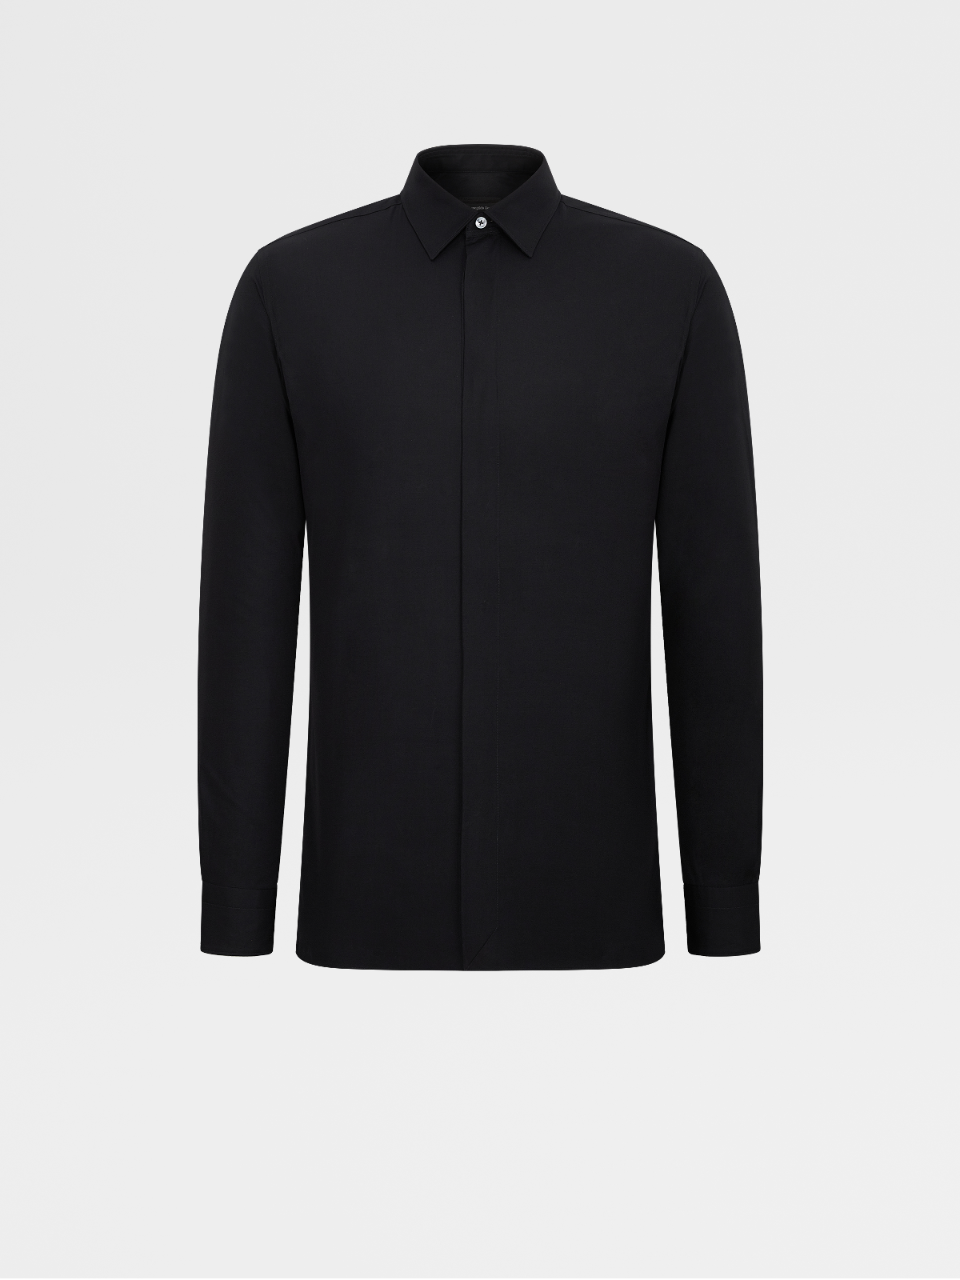 Black Trofeo™ Comfort Cotton Tailoring Shirt, City Slim Fit